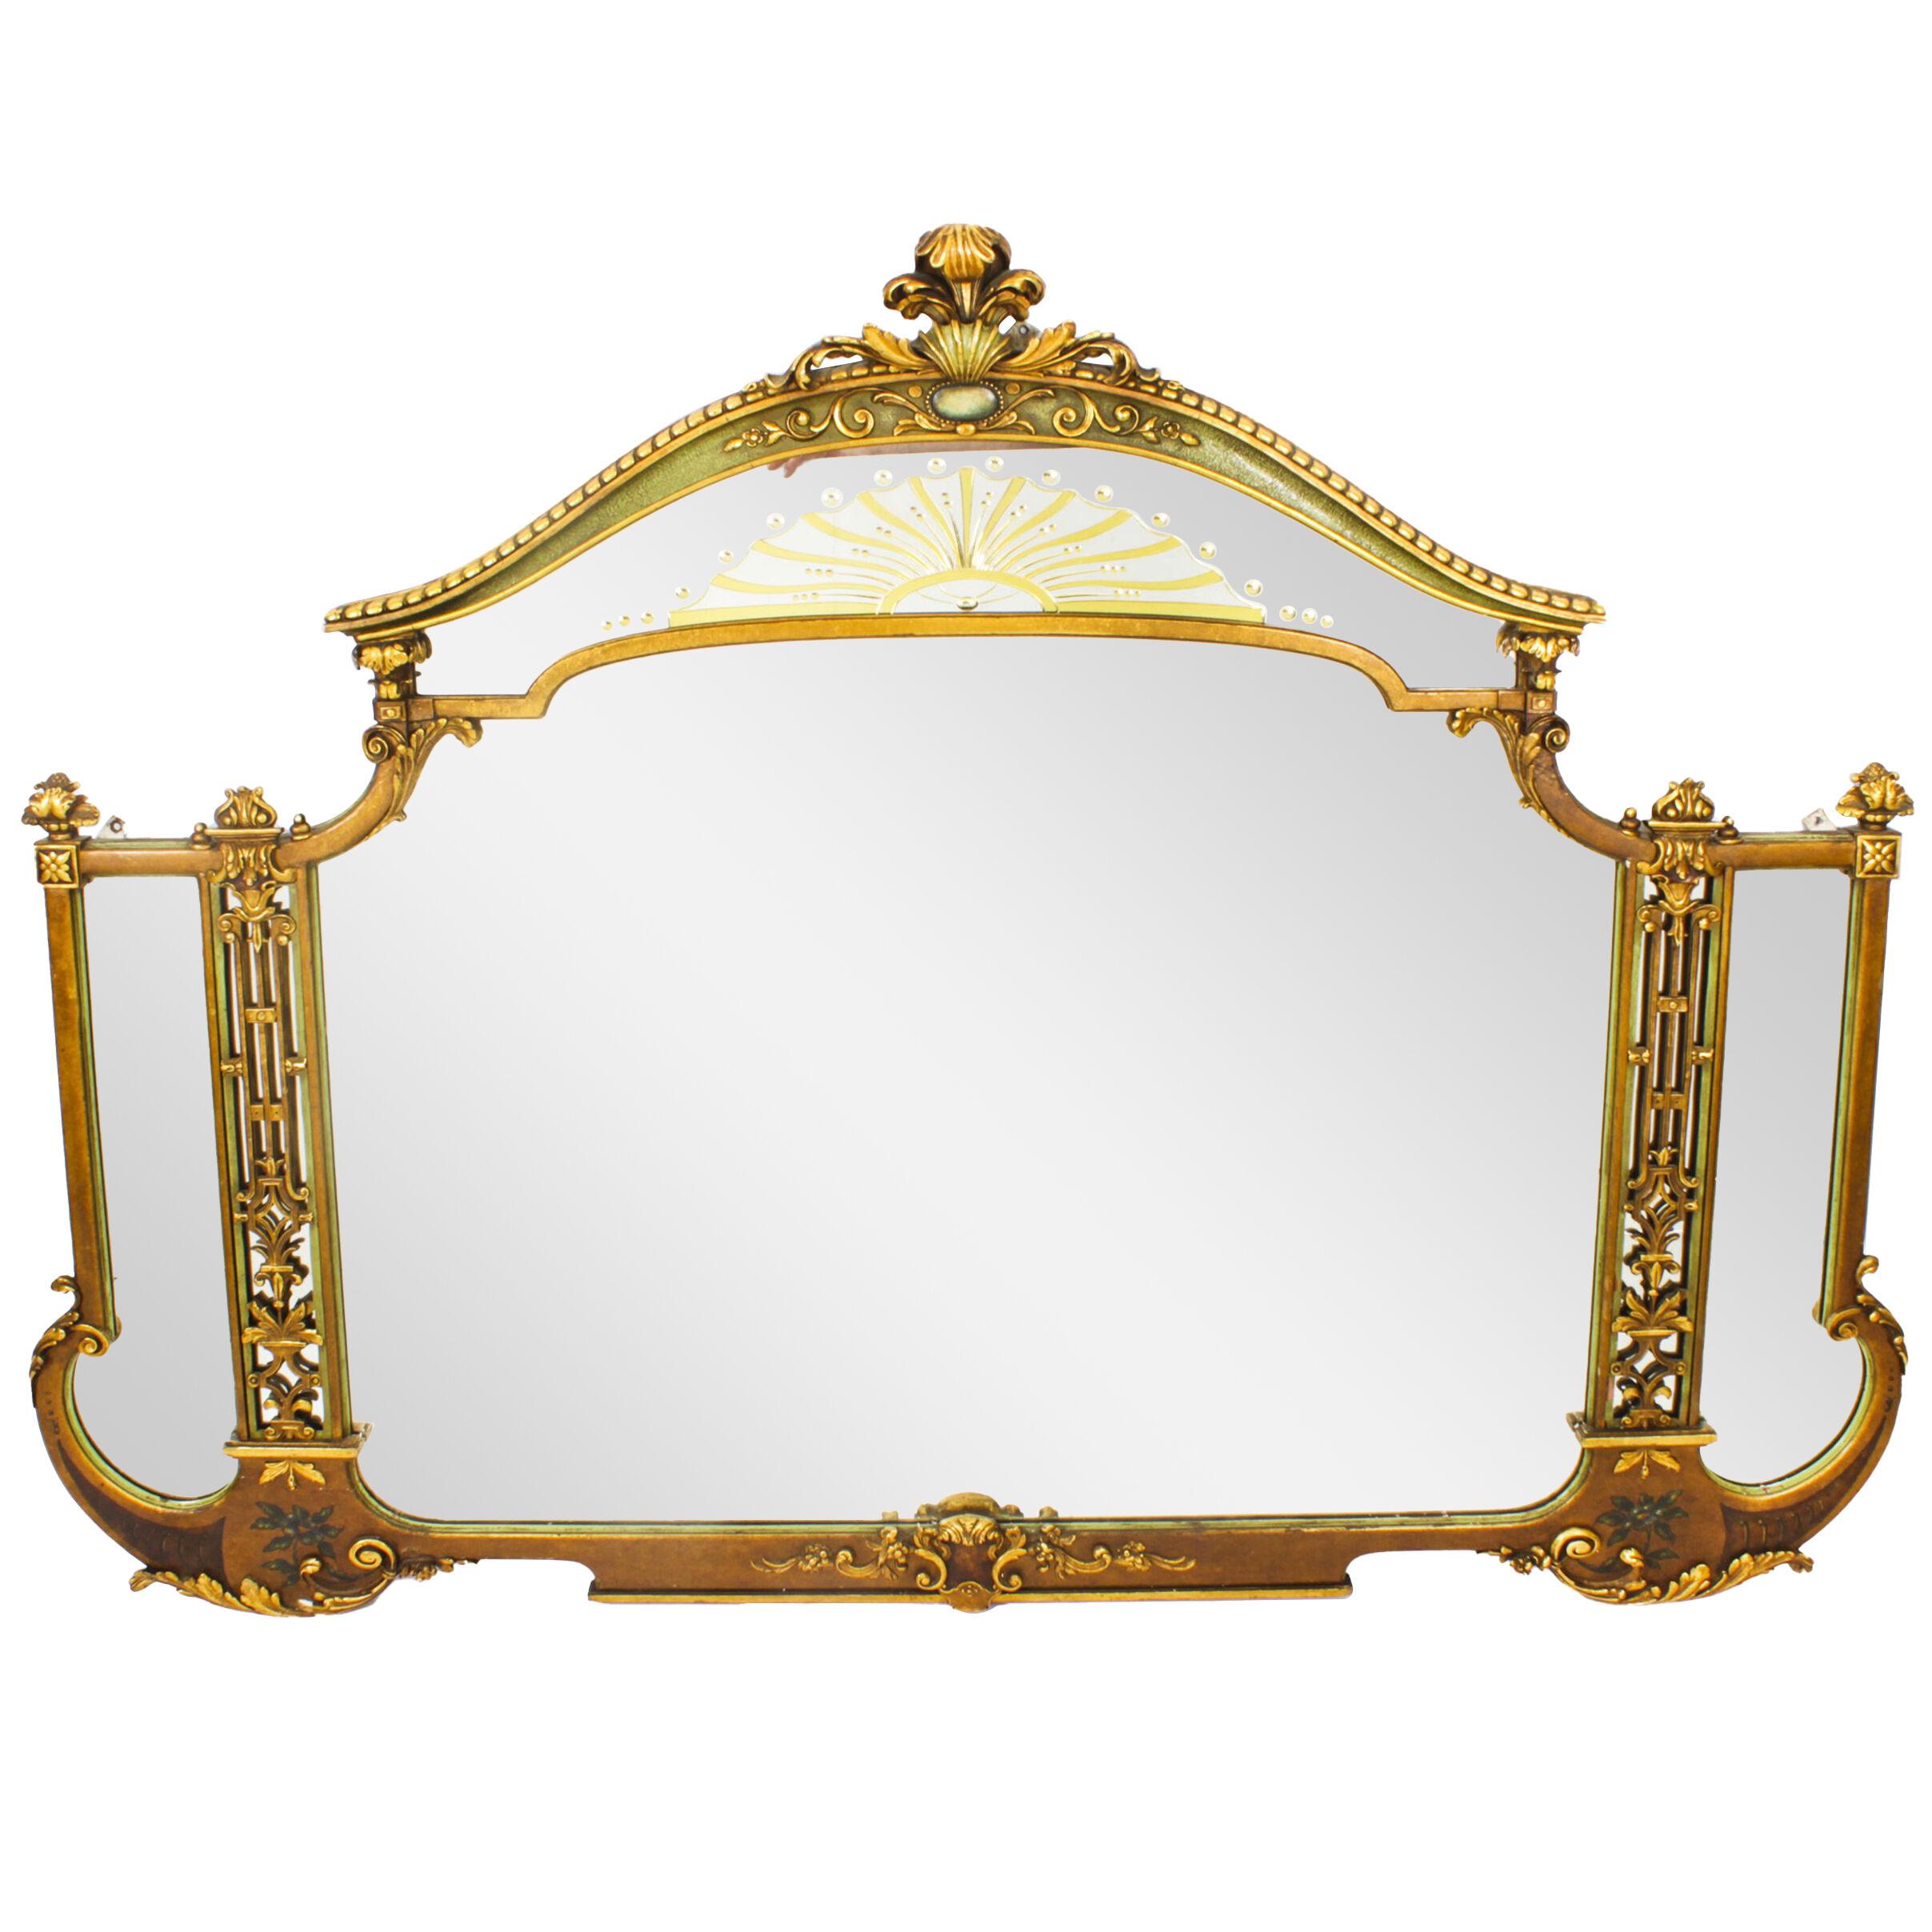 Antique Large English Art Deco Overmantel Mirror c.1920 137x182cm